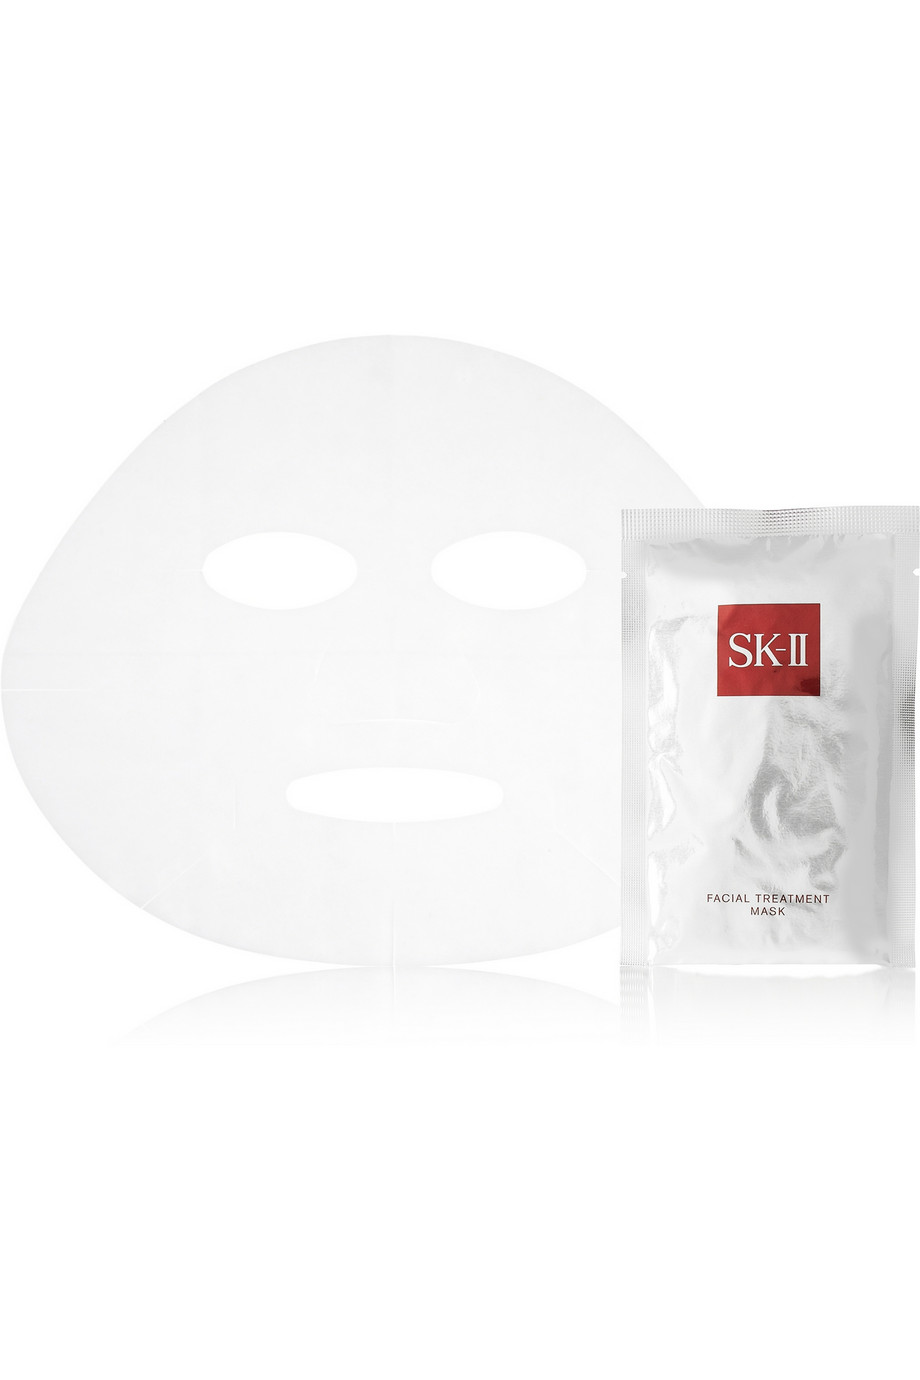 SKII Facial treatment mask95,19